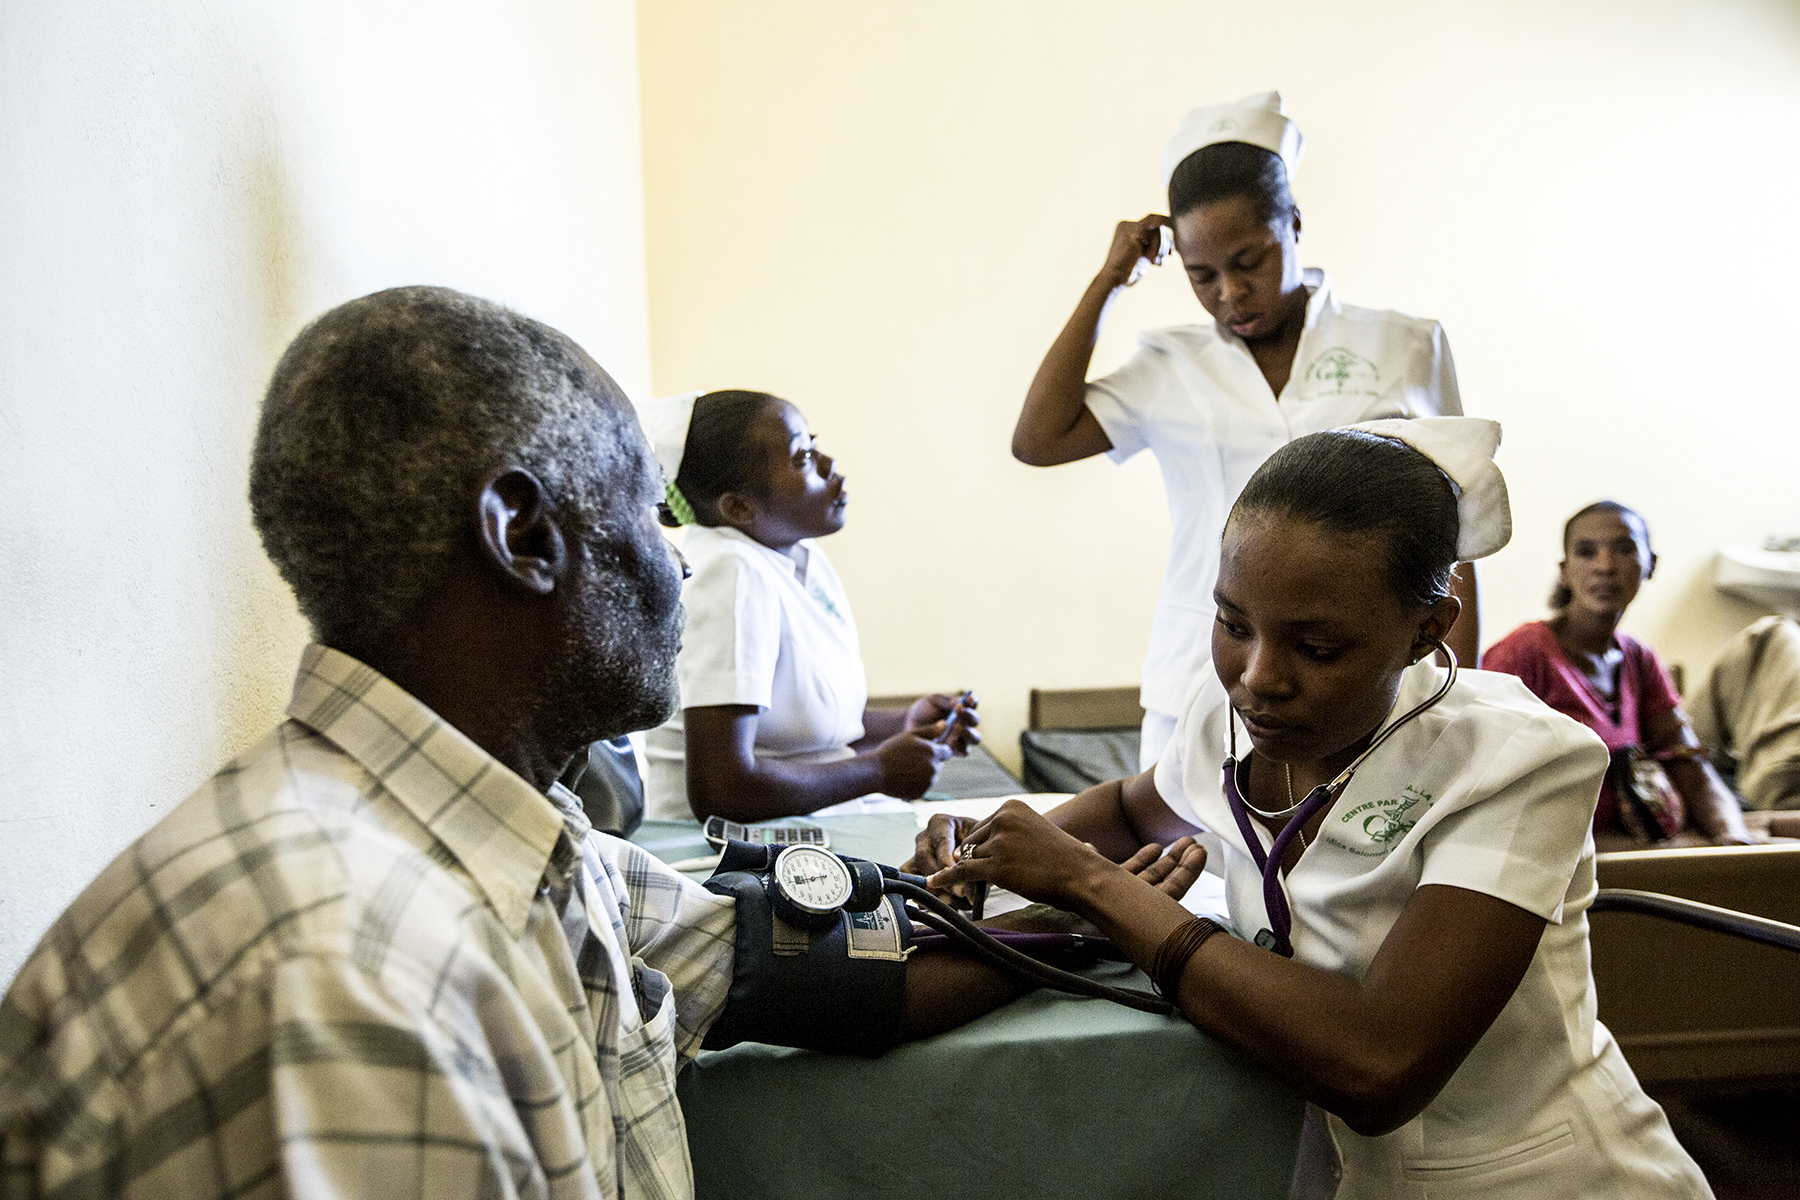 Healing_Art_Missions_Haiti_Medical Clinic_013.JPG